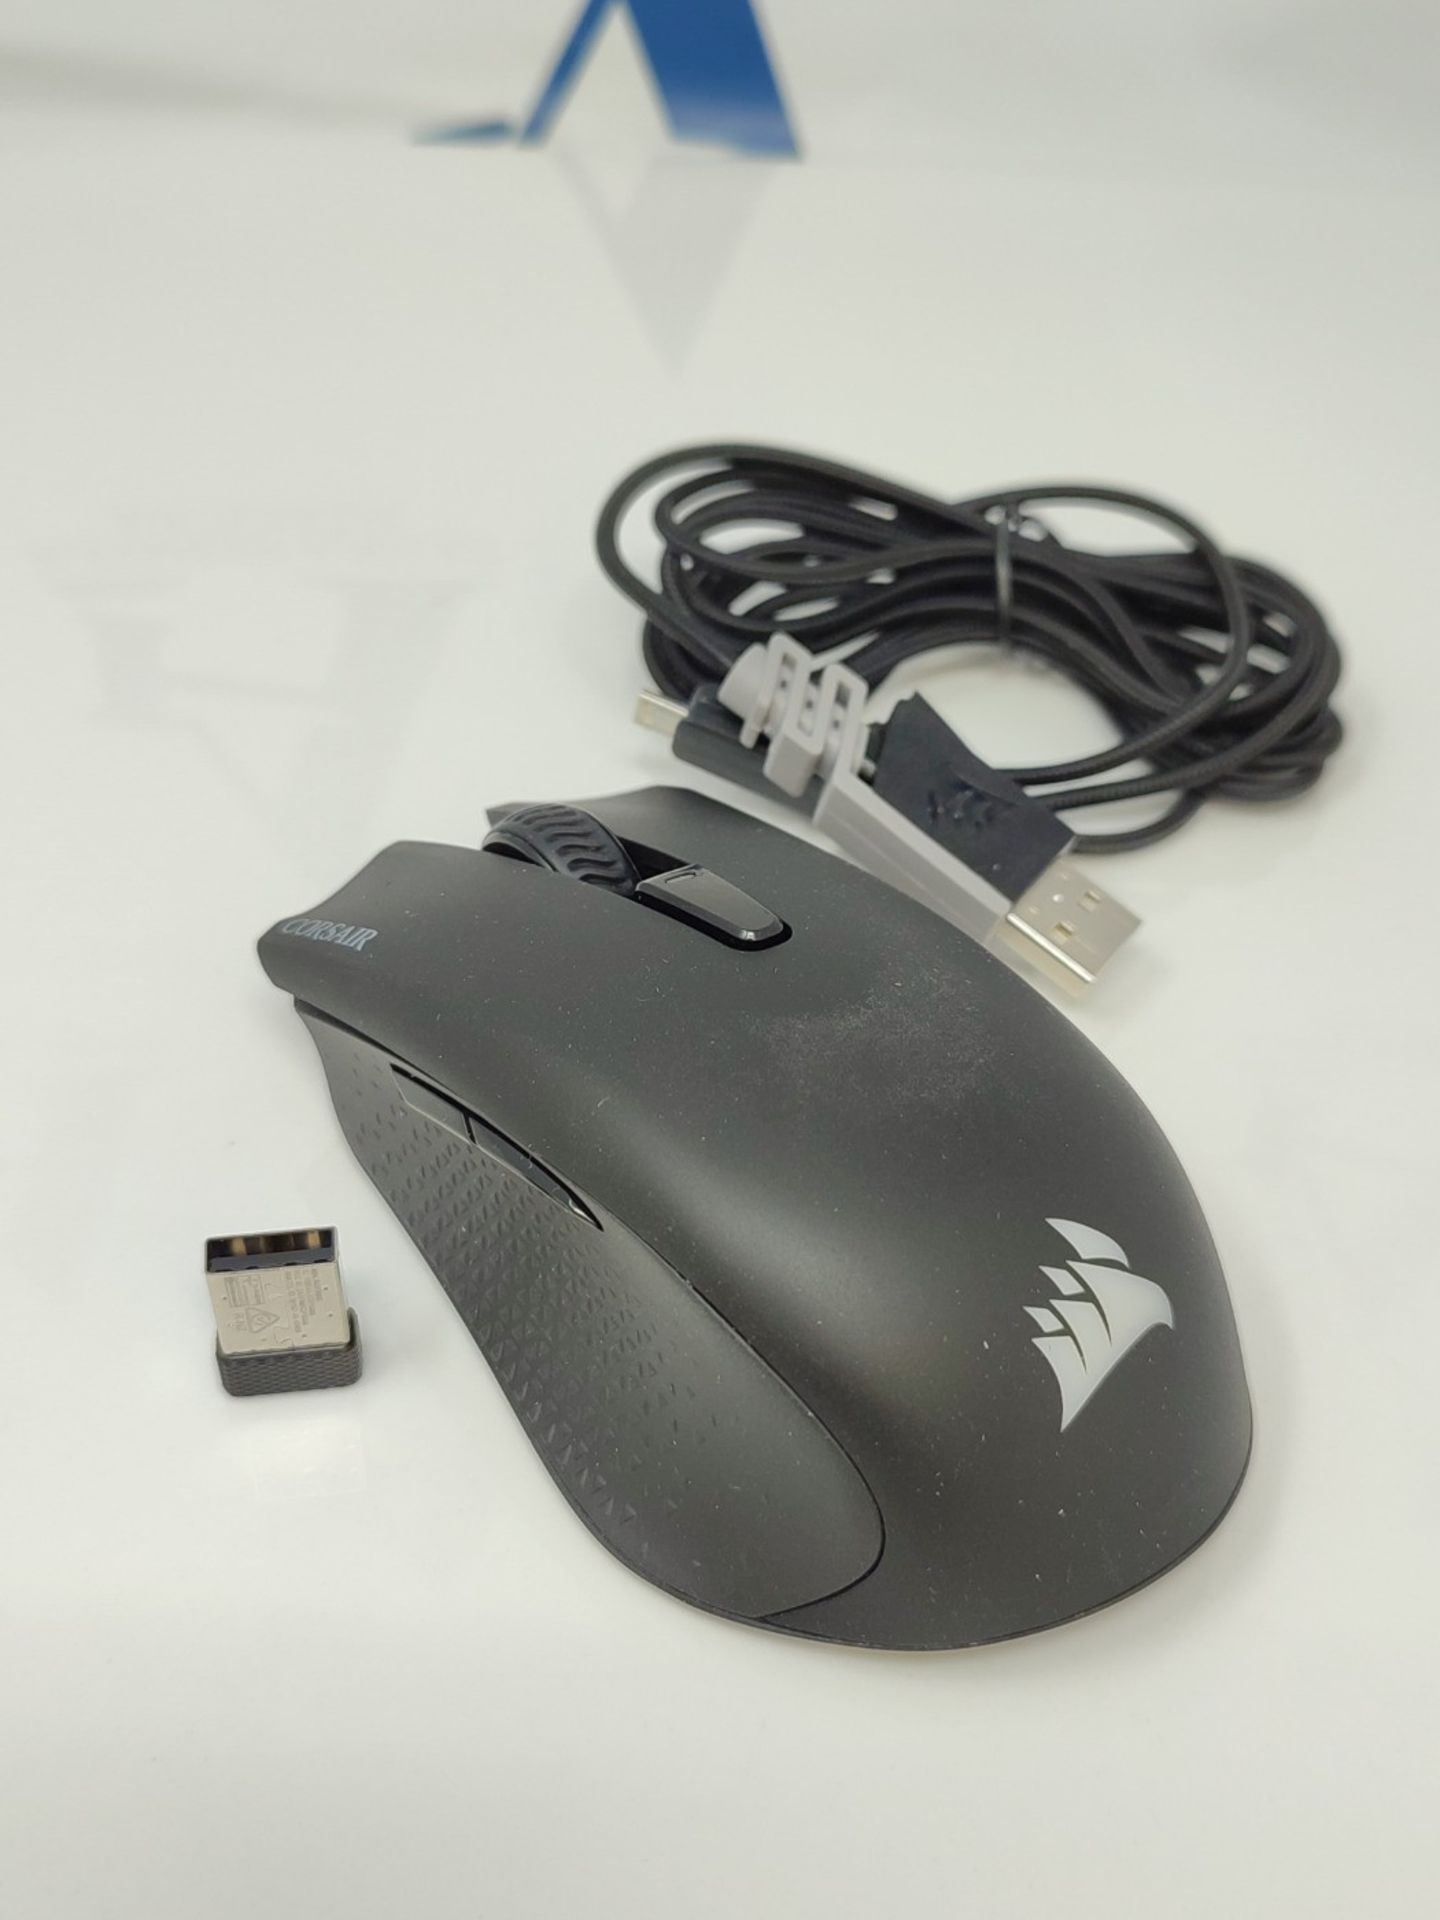 CORSAIR HARPOON WIRELESS RGB Lightweight FPS/MOBA Gaming Mouse - 10,000 DPI - 6 Progra - Image 3 of 3